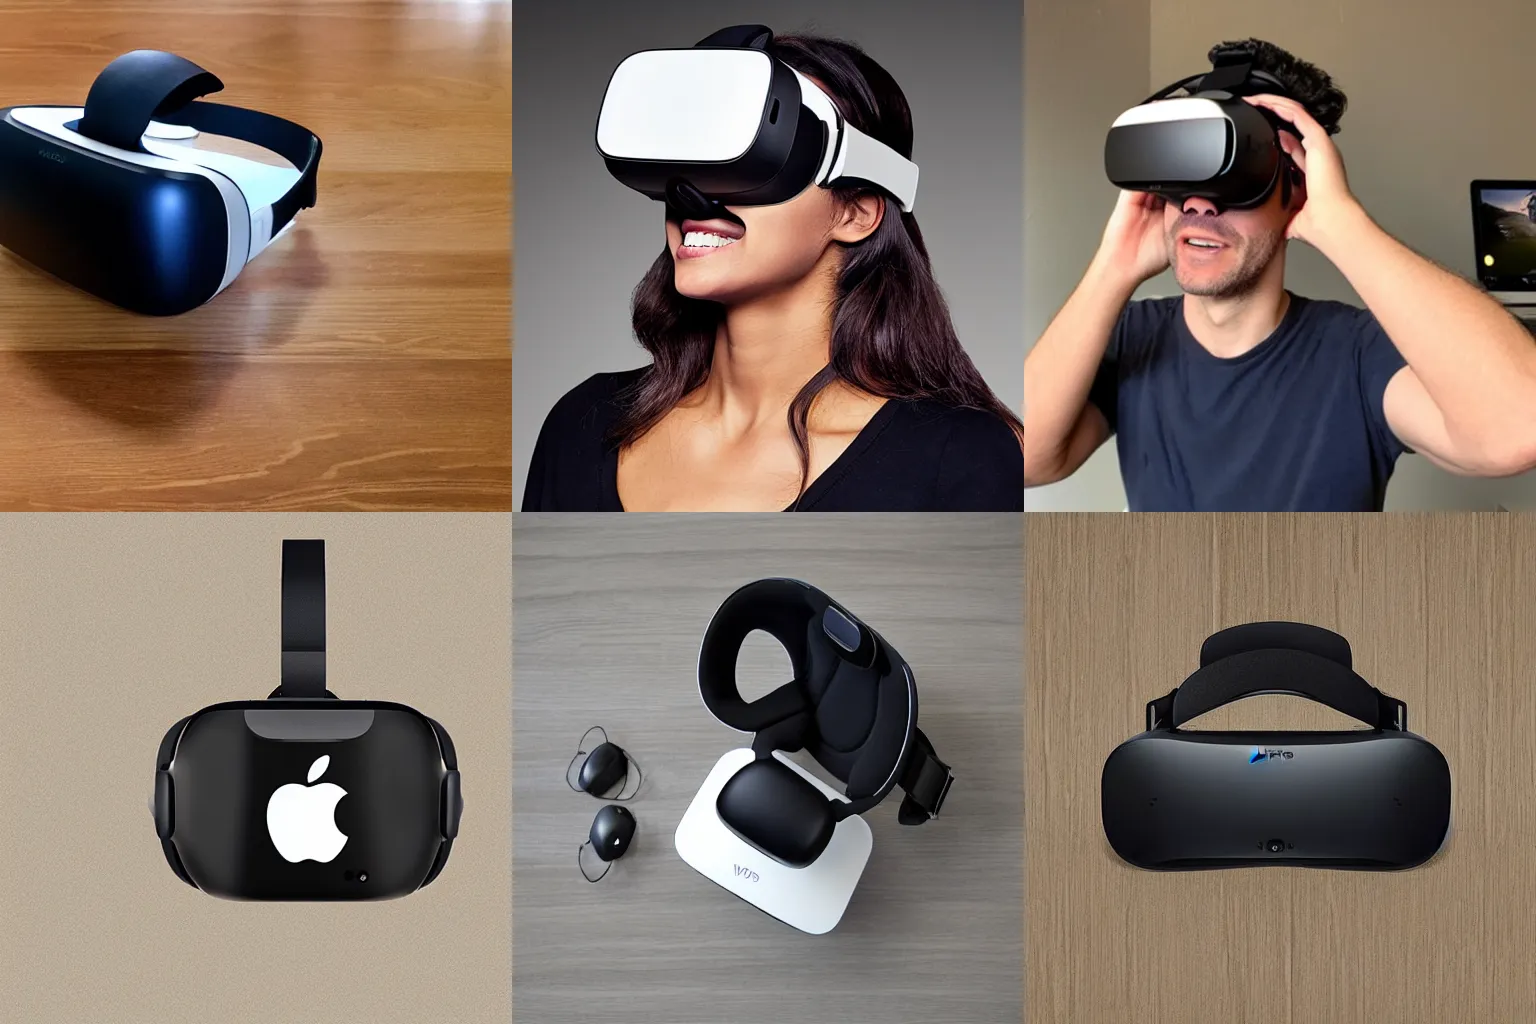 Prompt: apple VR headset